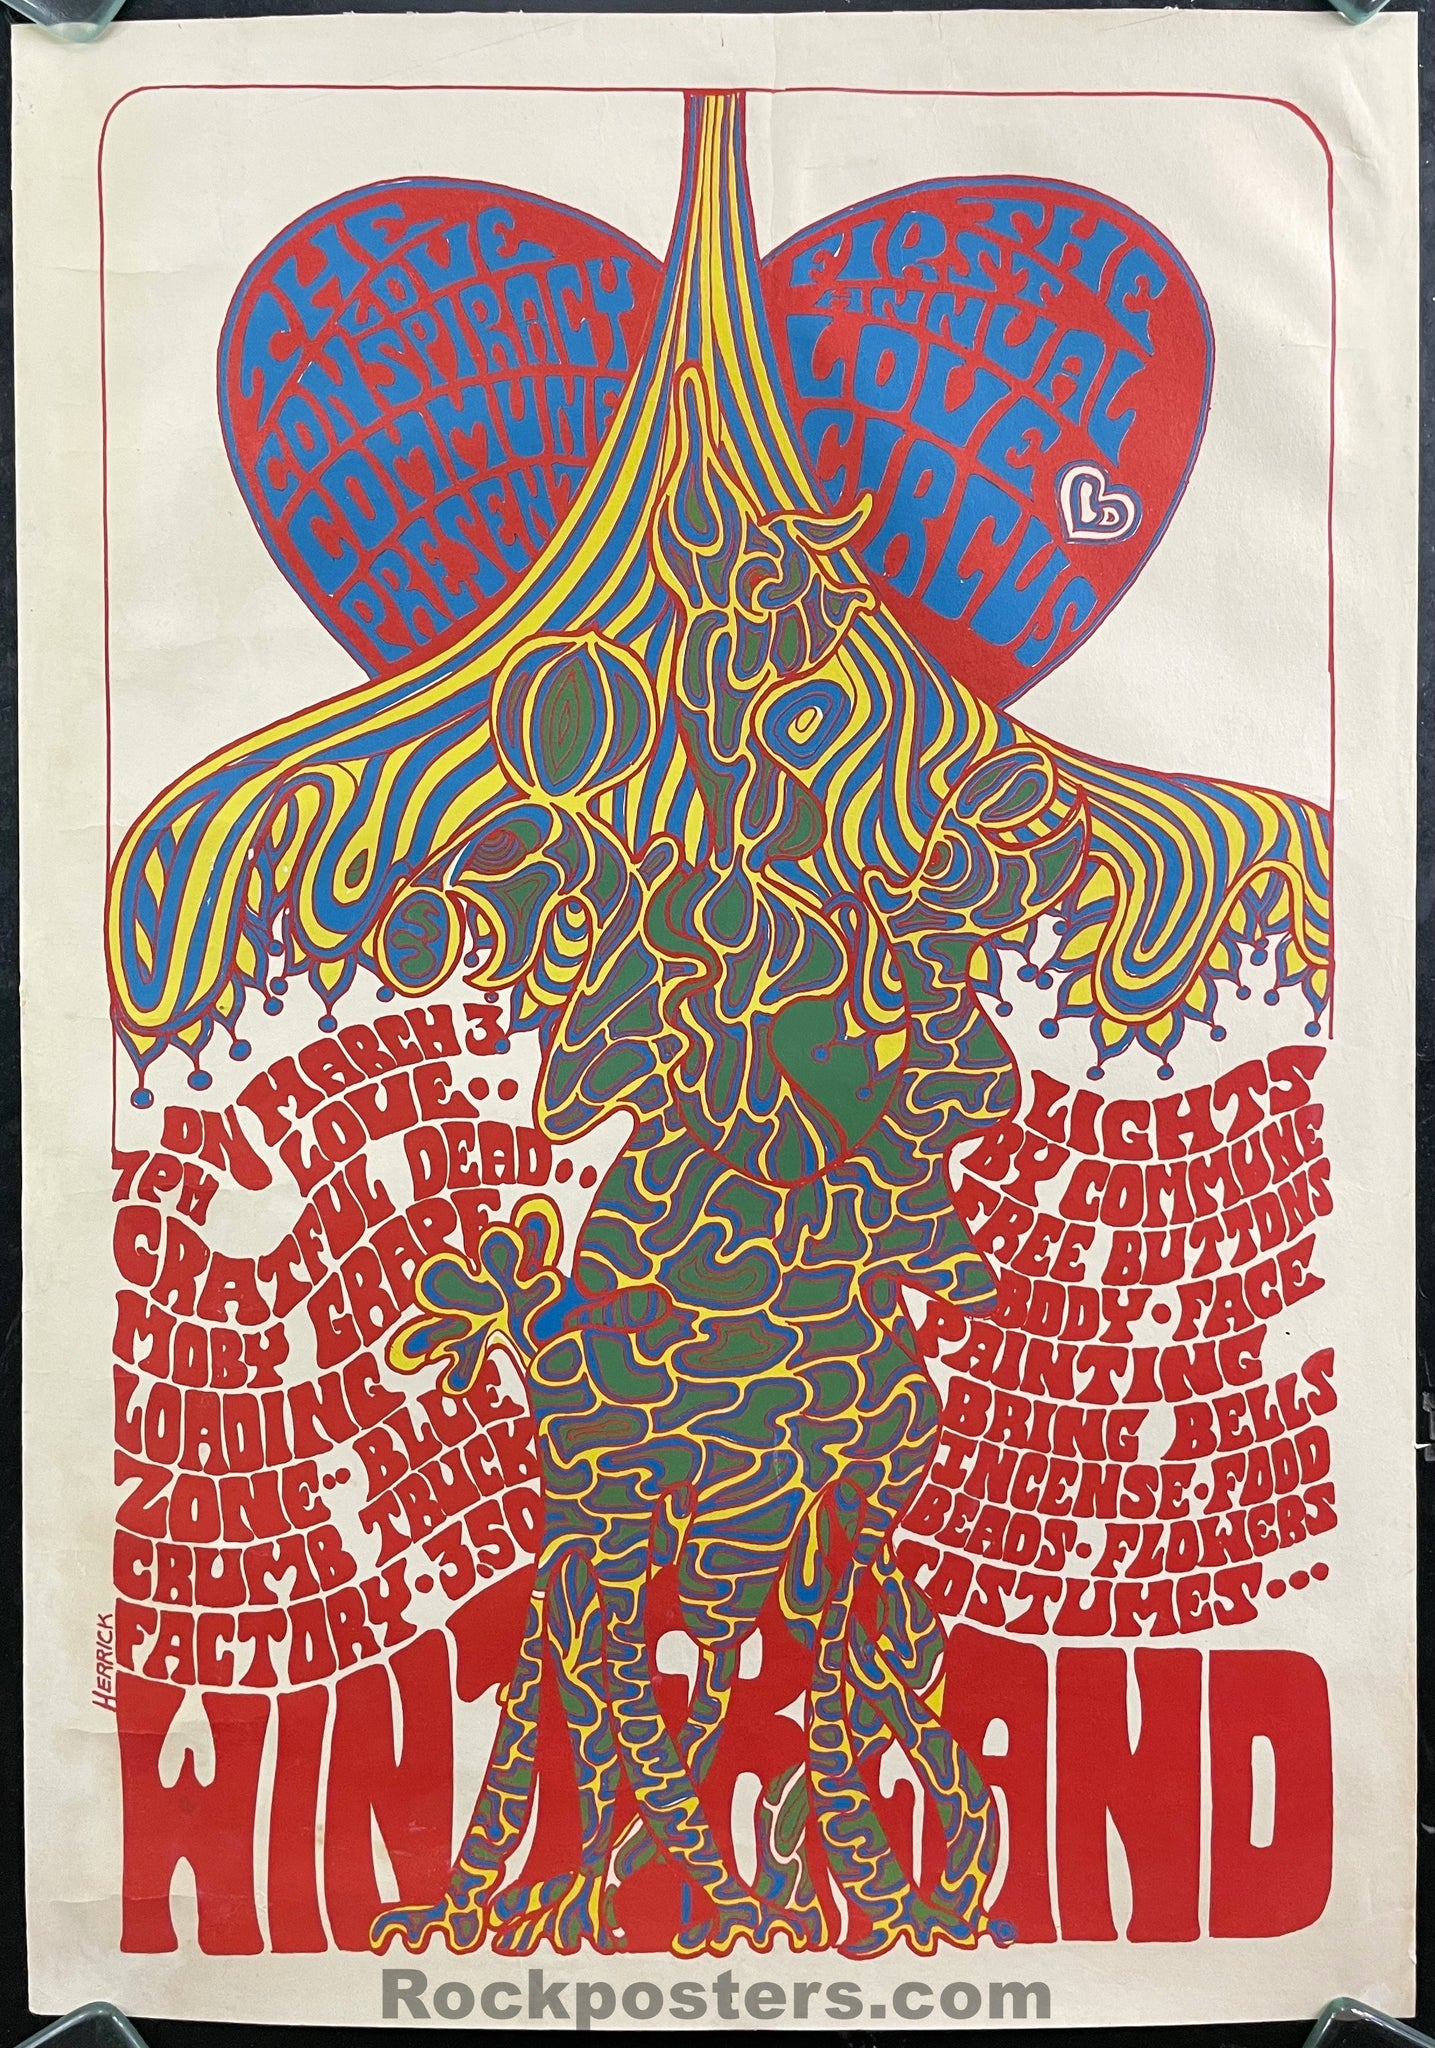 AUCTION - AOR 2.194 - Grateful Dead - 1967 Poster - Winterland - Very Good